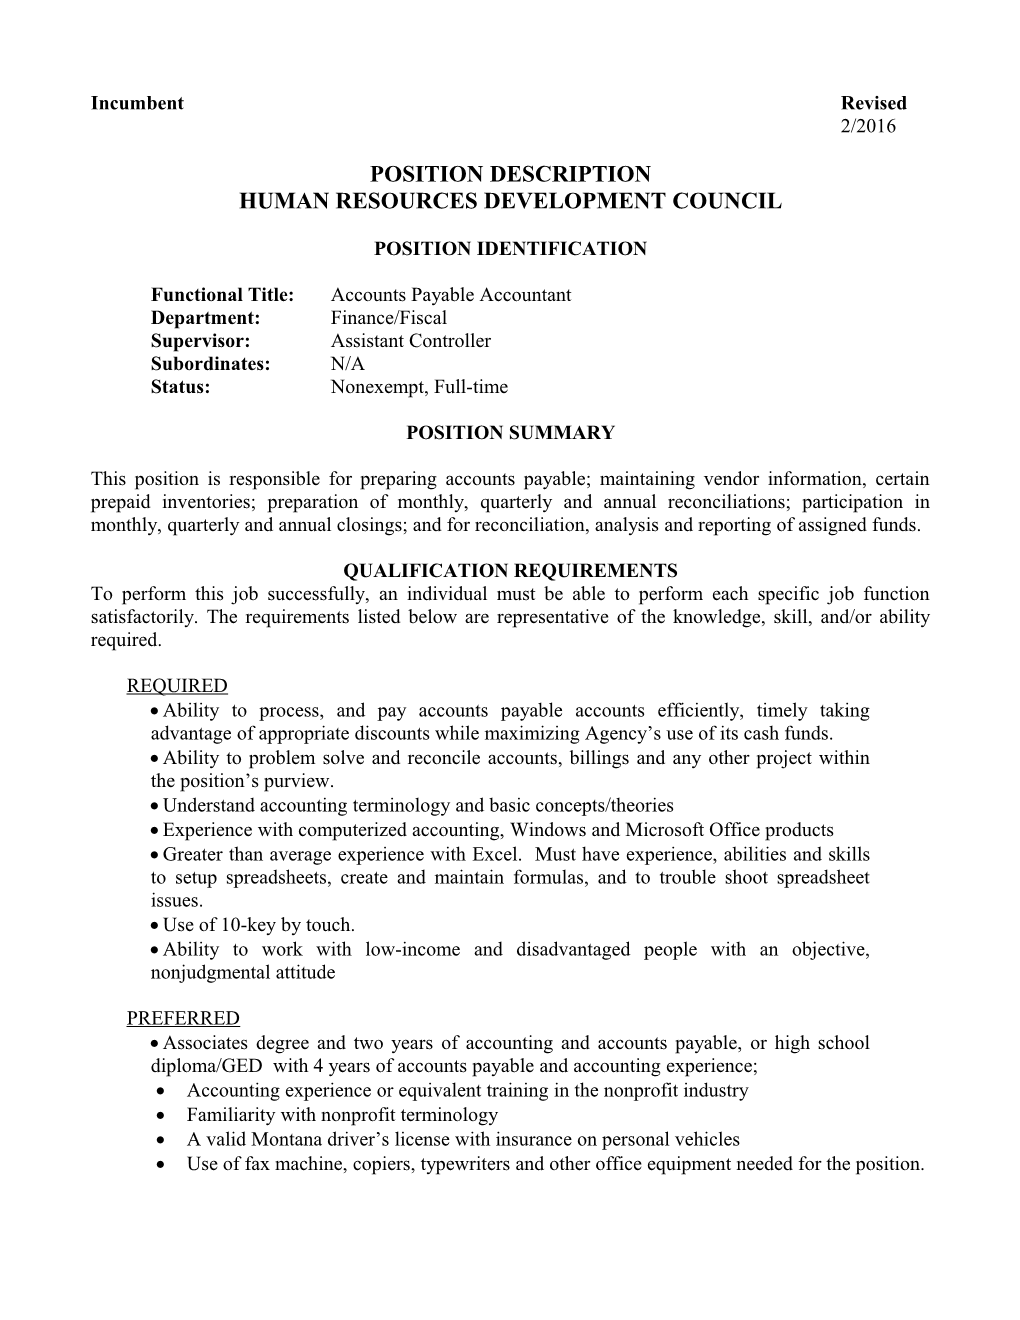 Human Resources Development Council